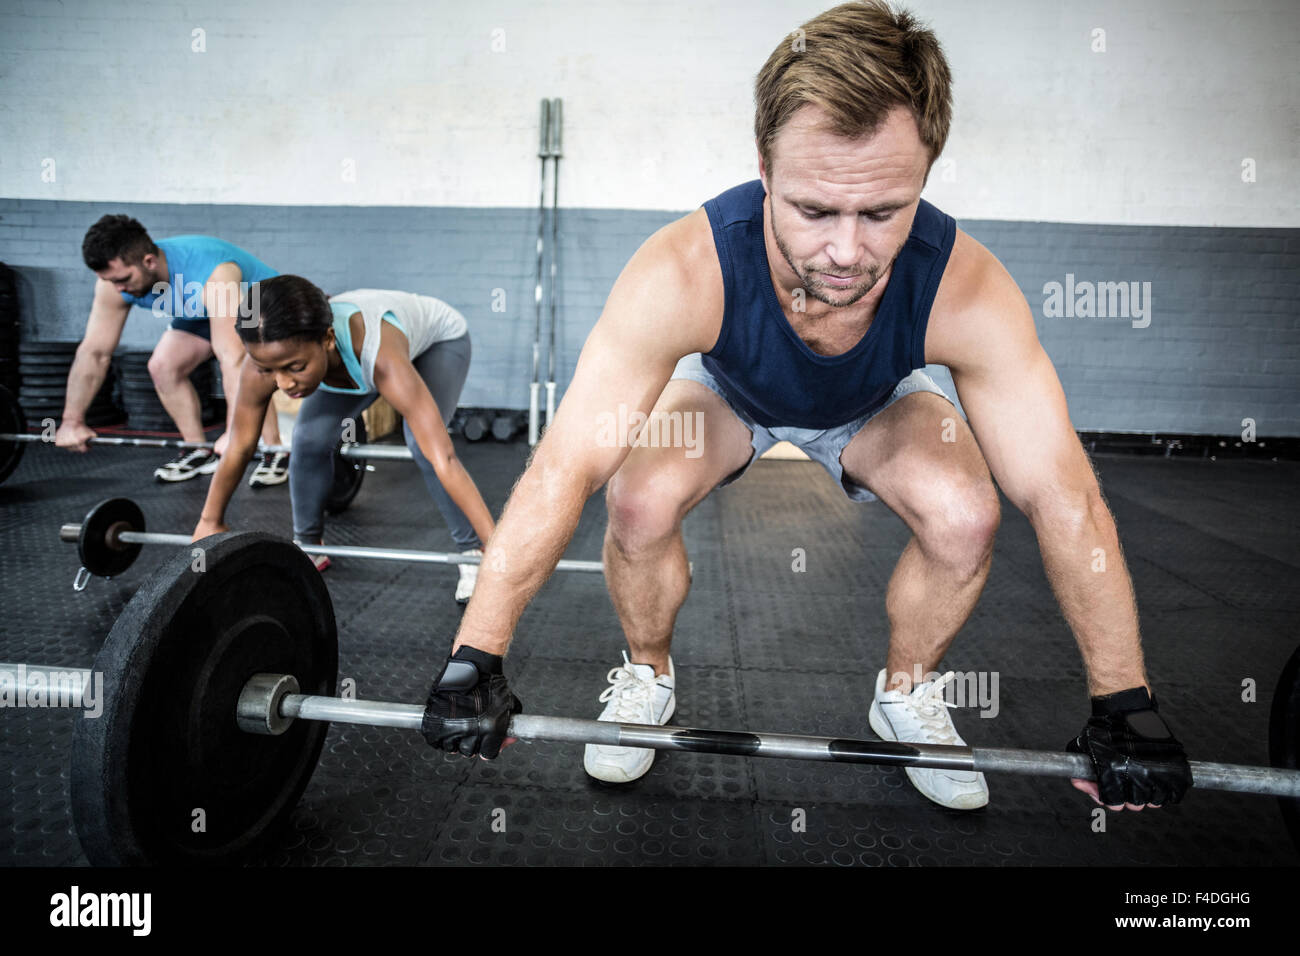 Three muscular athletes liftings barbells Stock Photo